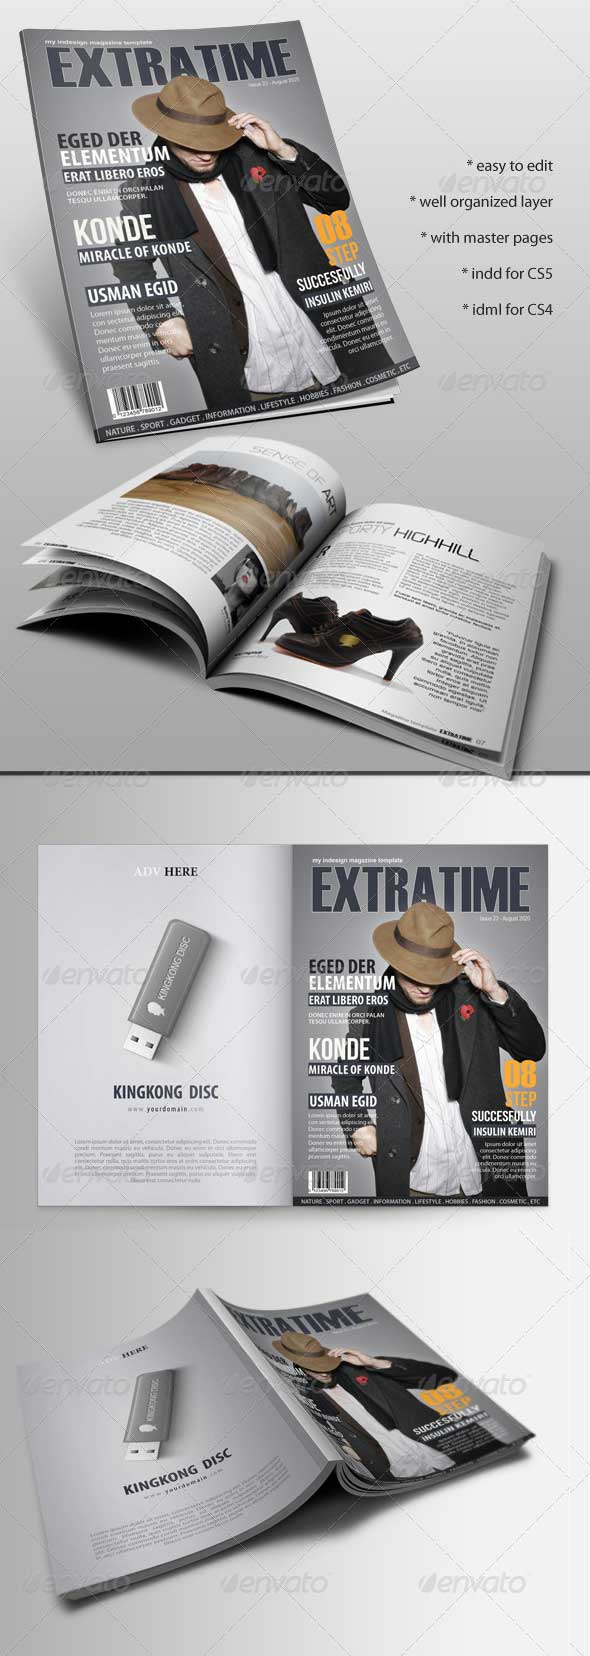 extratime-magazine-template